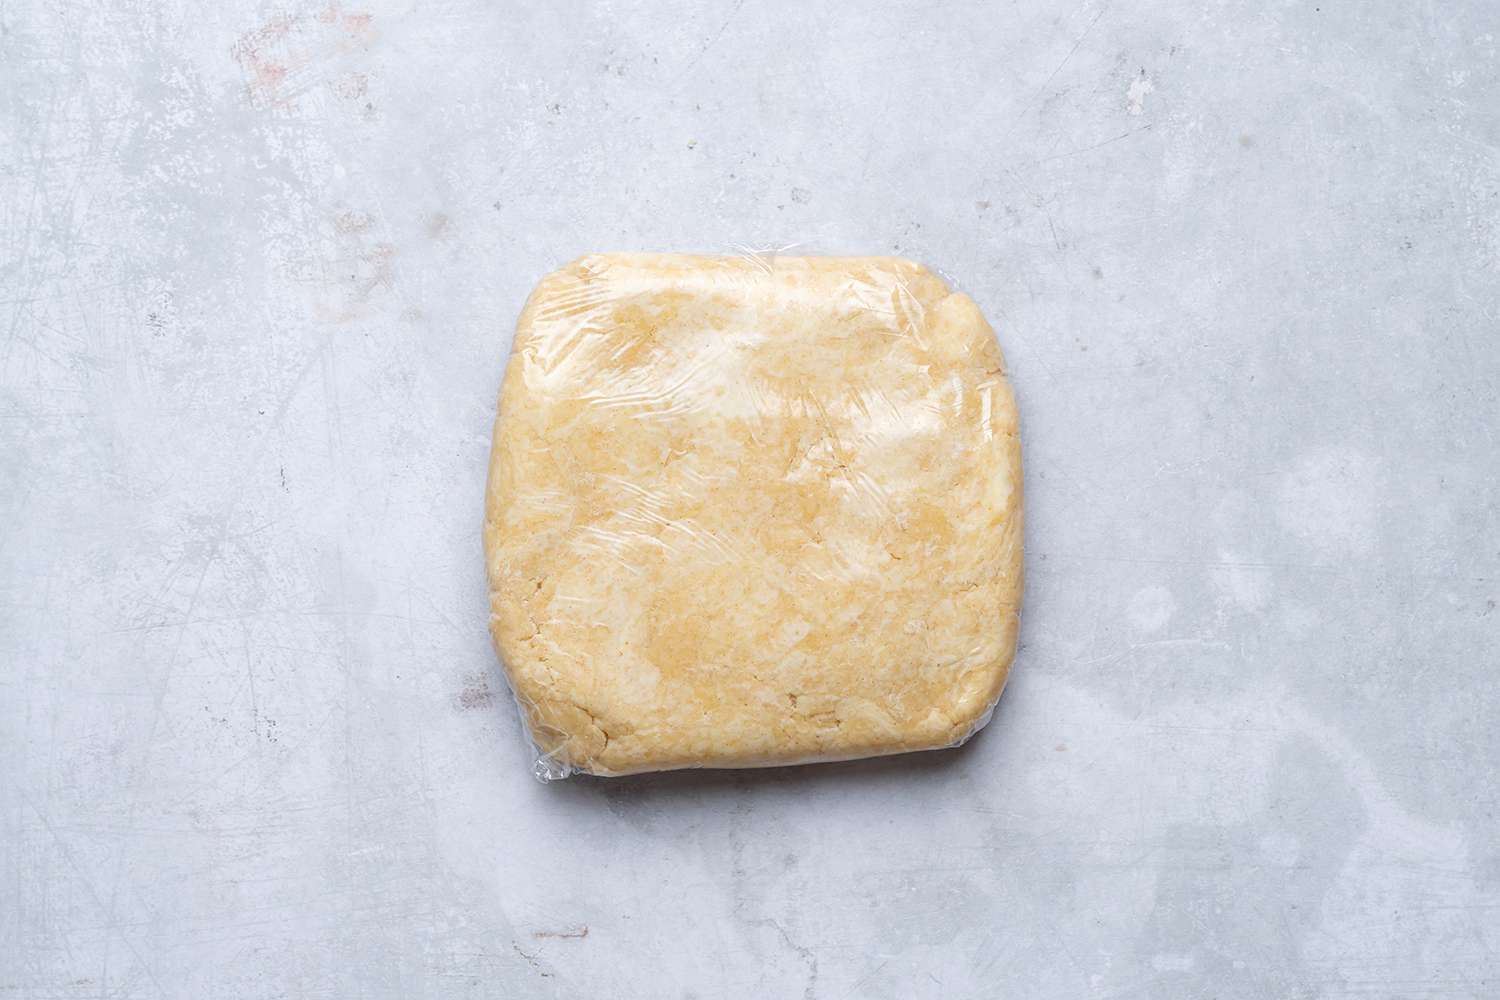 pie crust dough wrapped in plastic